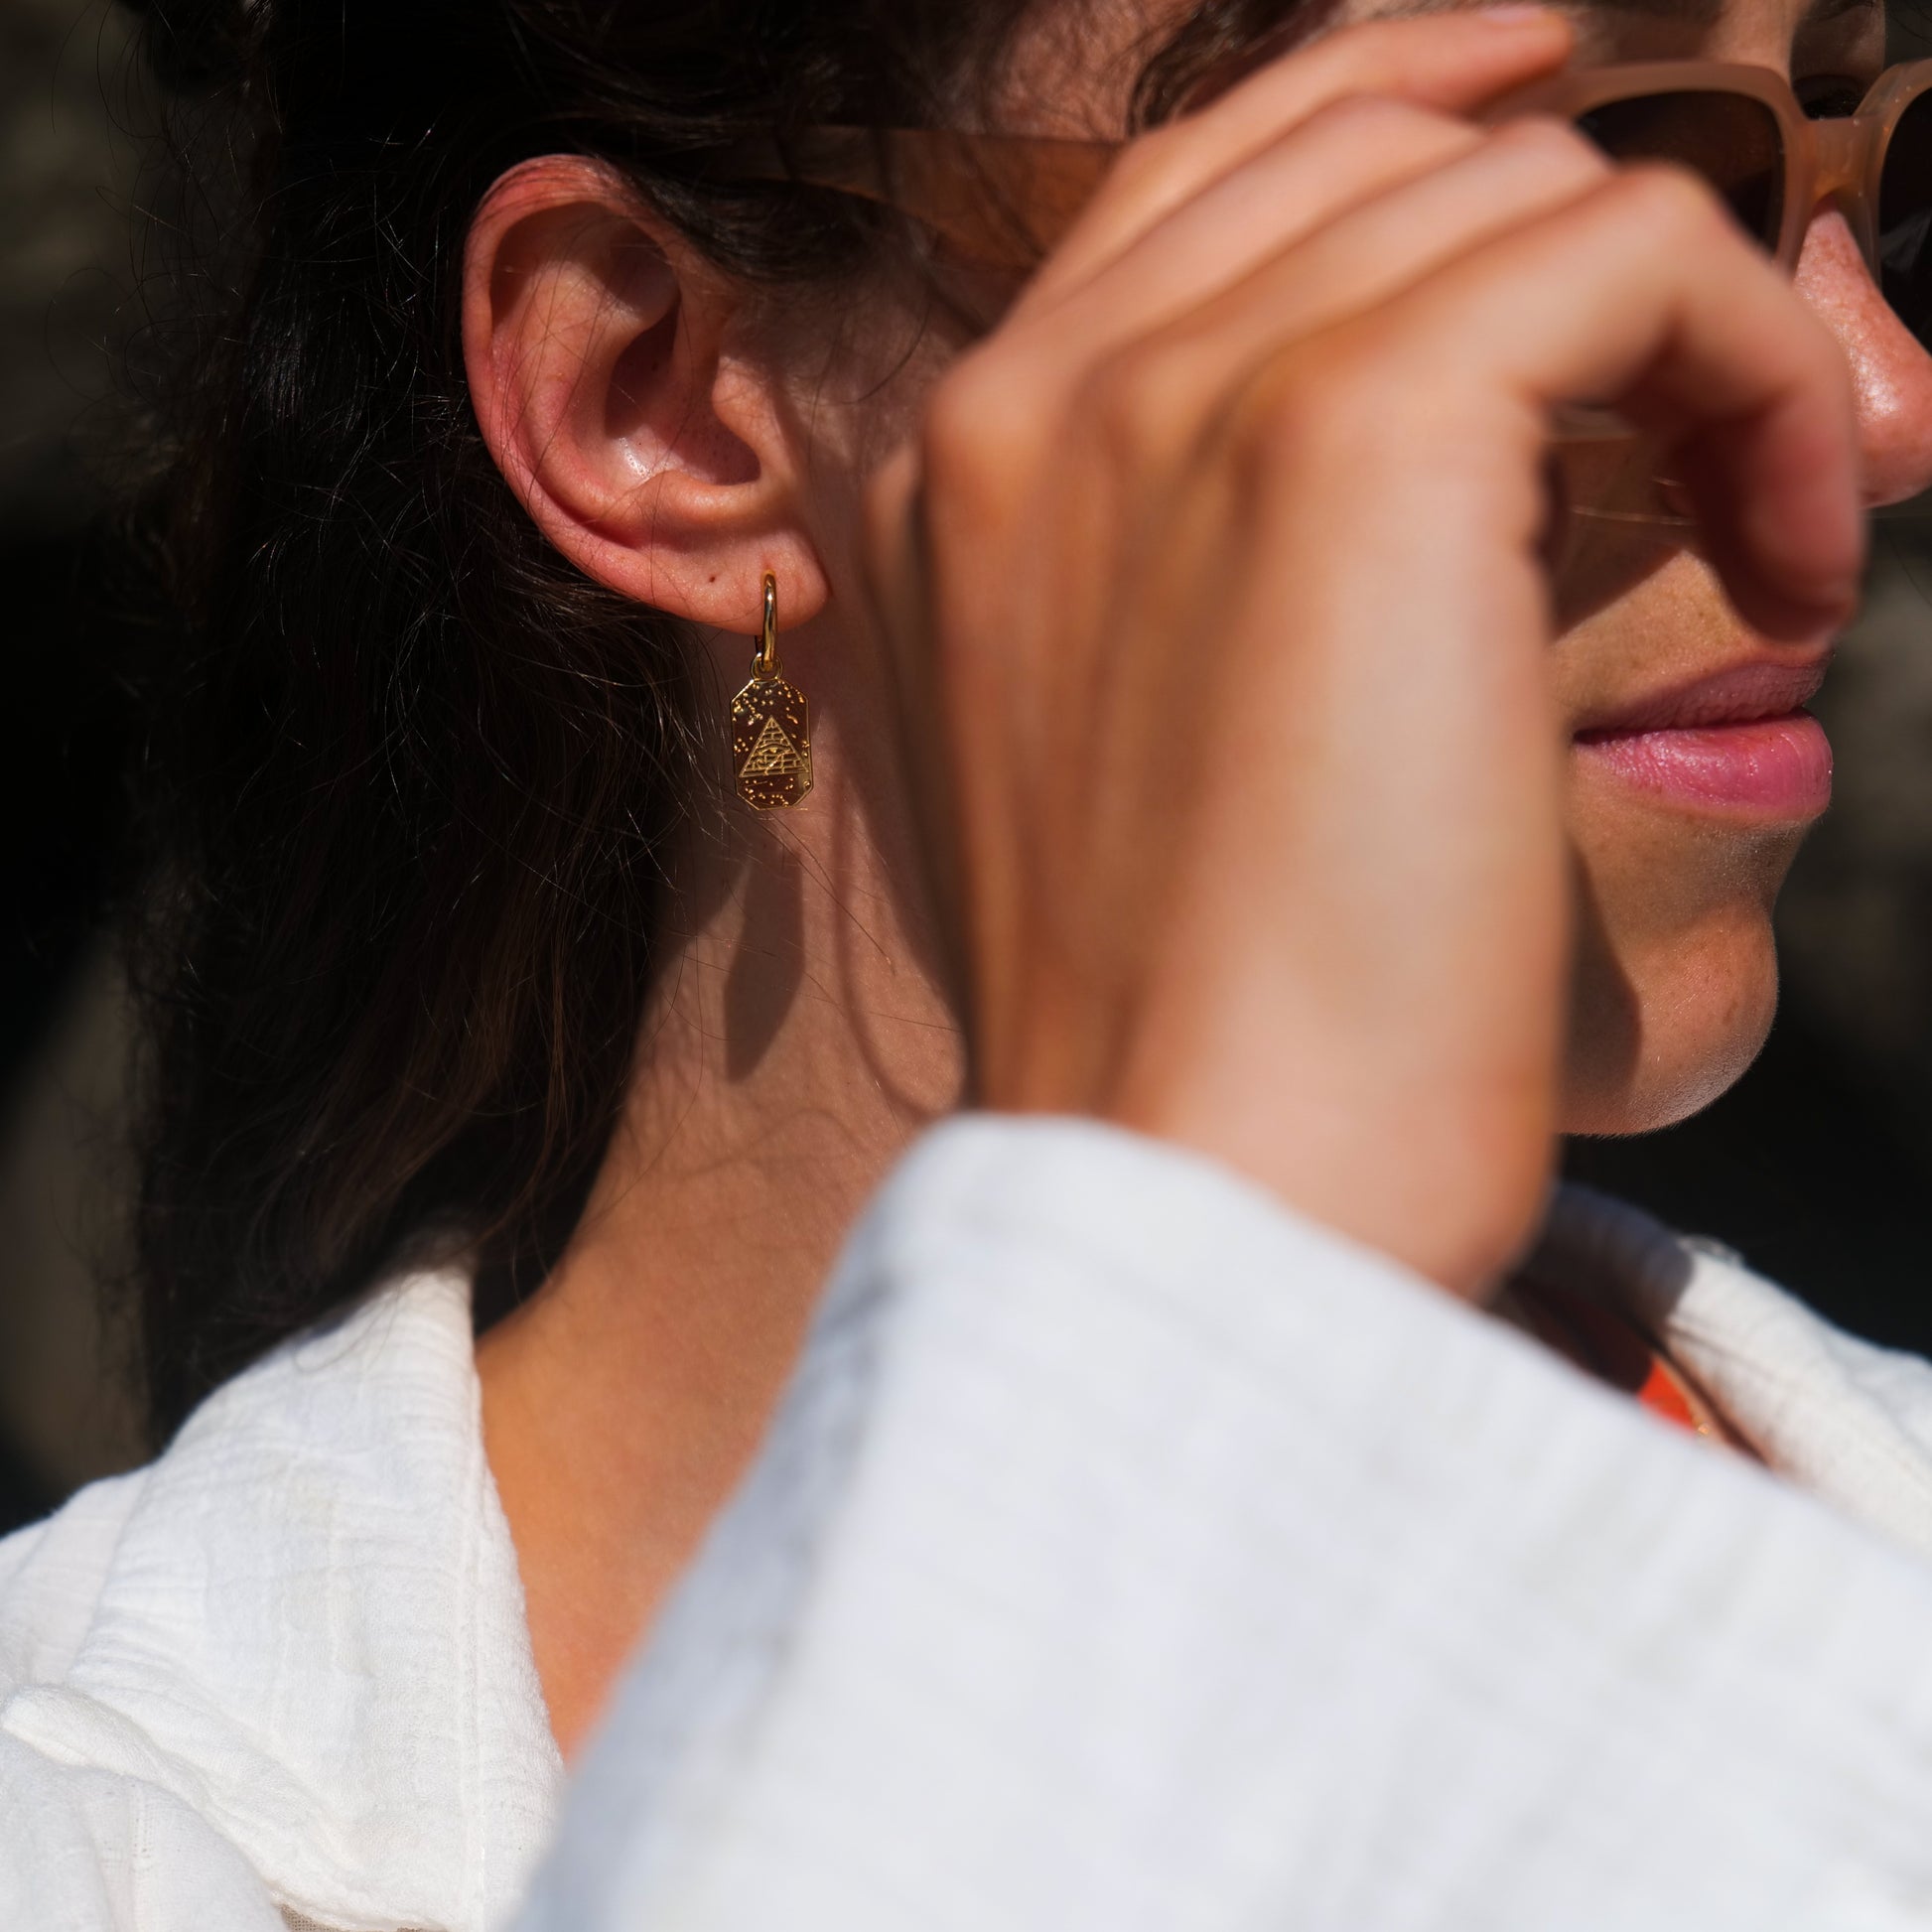 Woman holding glasses wearing eye of Ra earring.